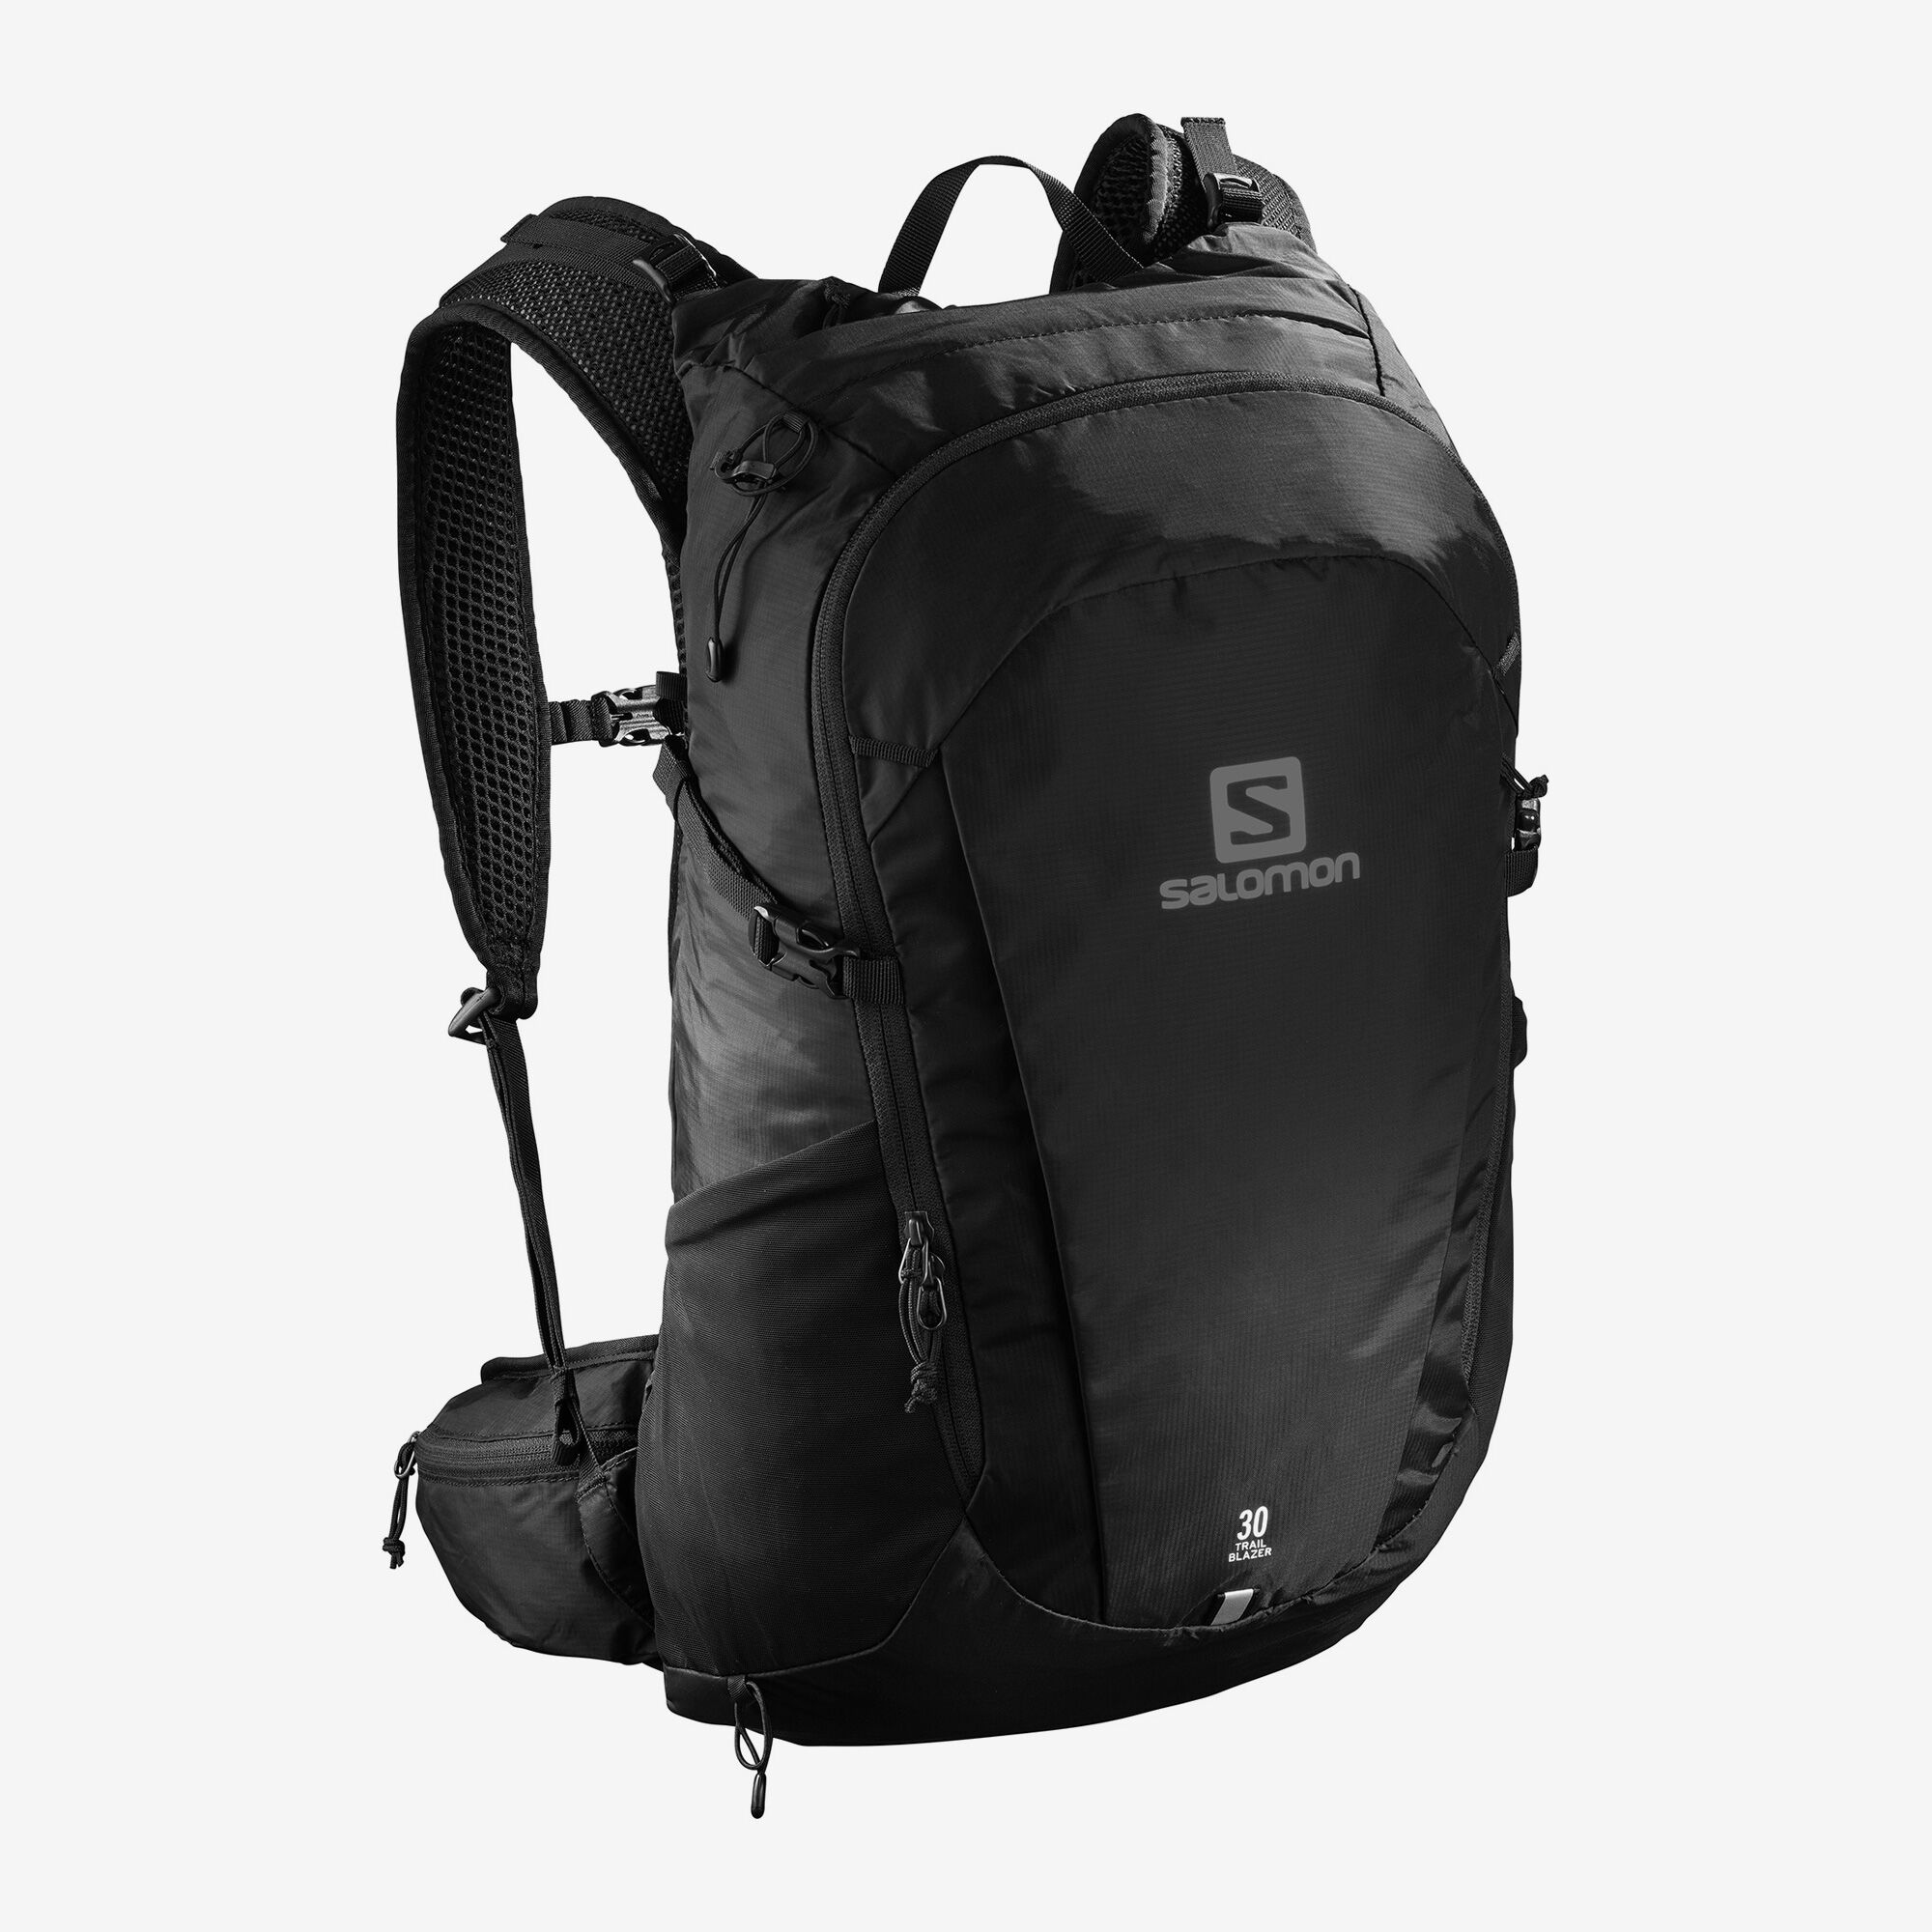 Montane Trailblazer 30 - Hiking backpack